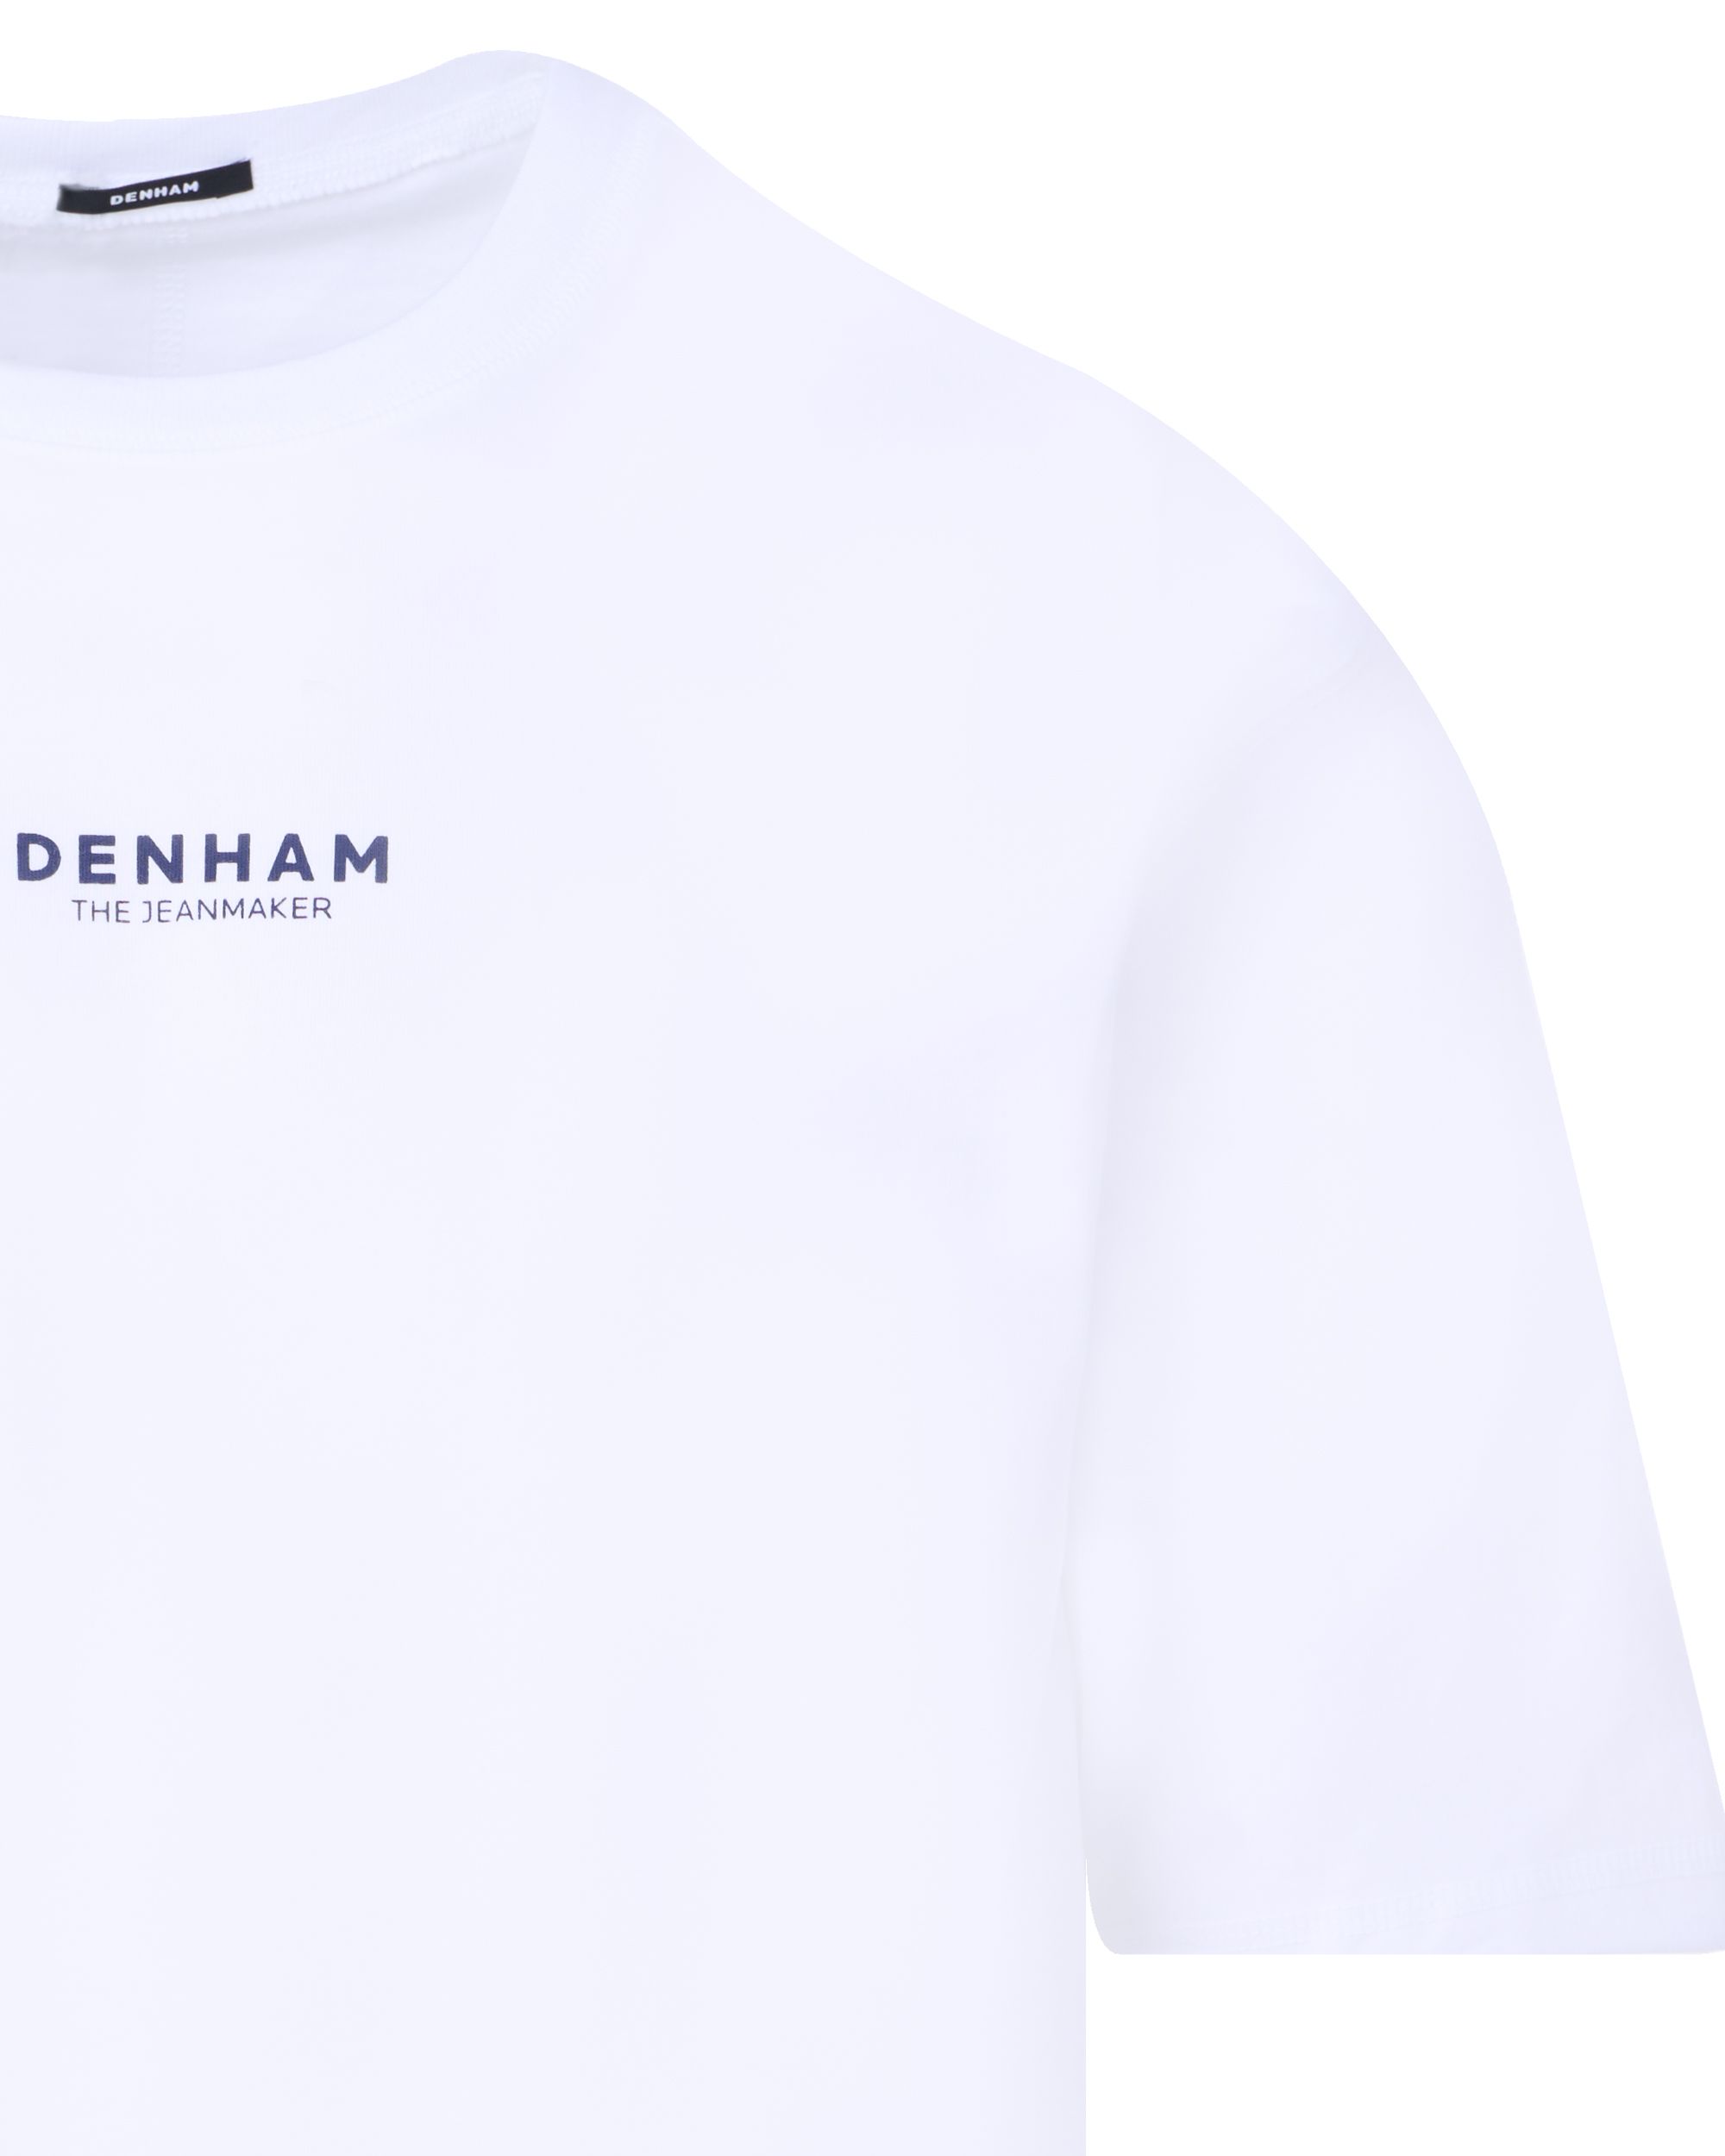 DENHAM Pelham Relax T-shirt KM Wit 094455-001-L